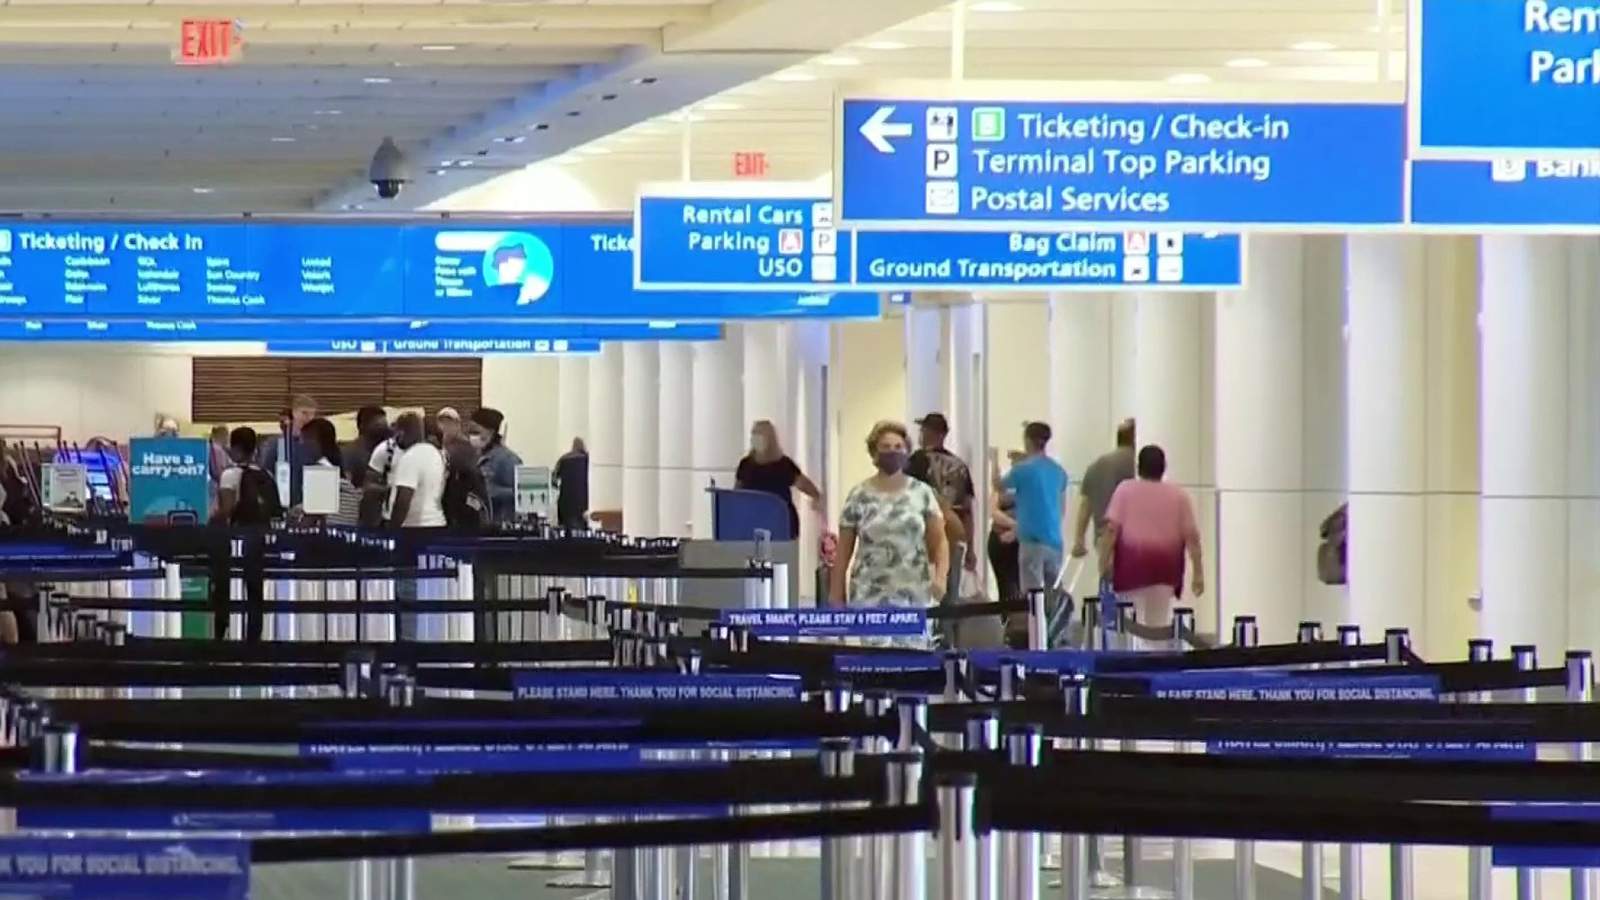 Orlando International Airport severely impacted by coroanvirus pandemic